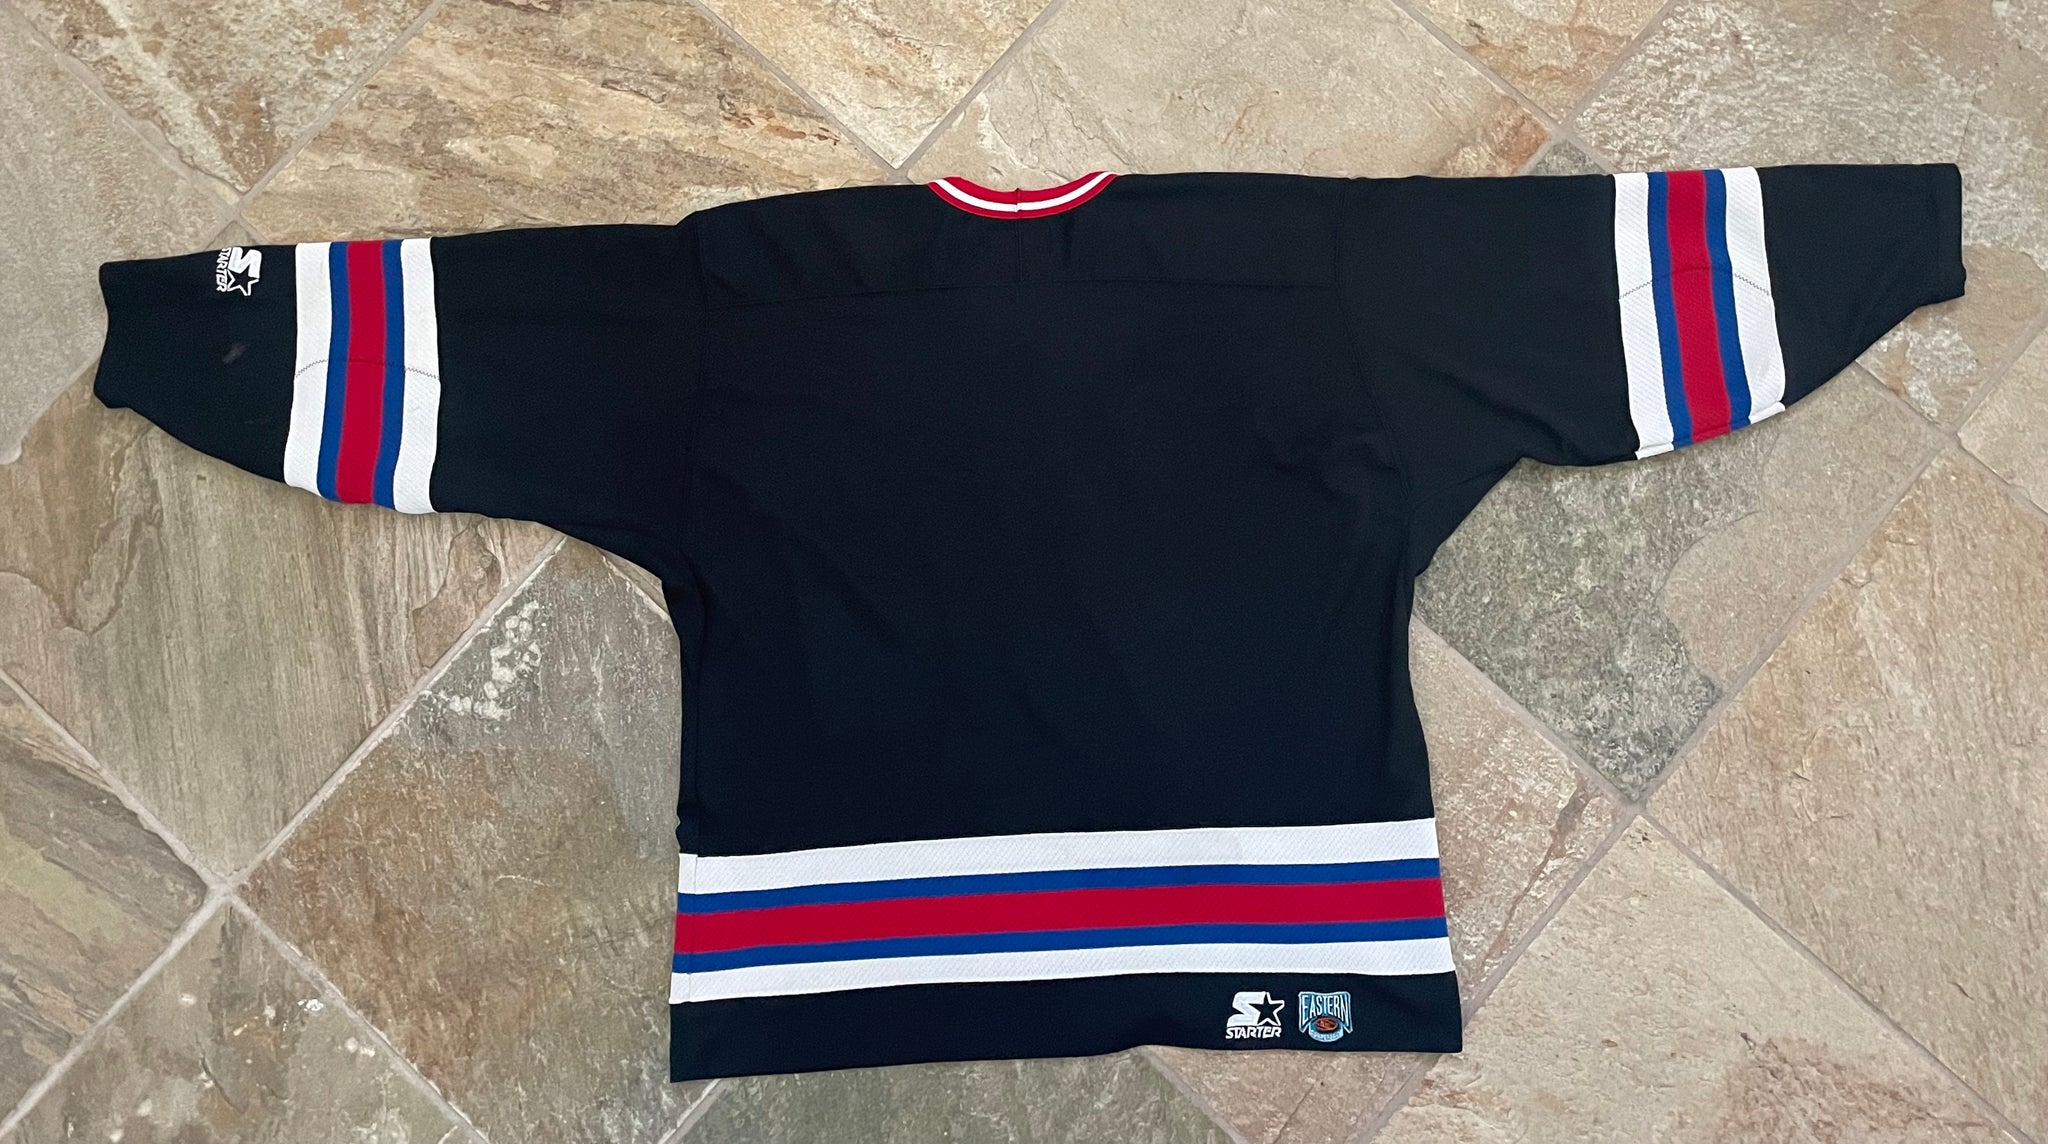 Vintage 90s New York Rangers NHL Starter Jersey - Size M